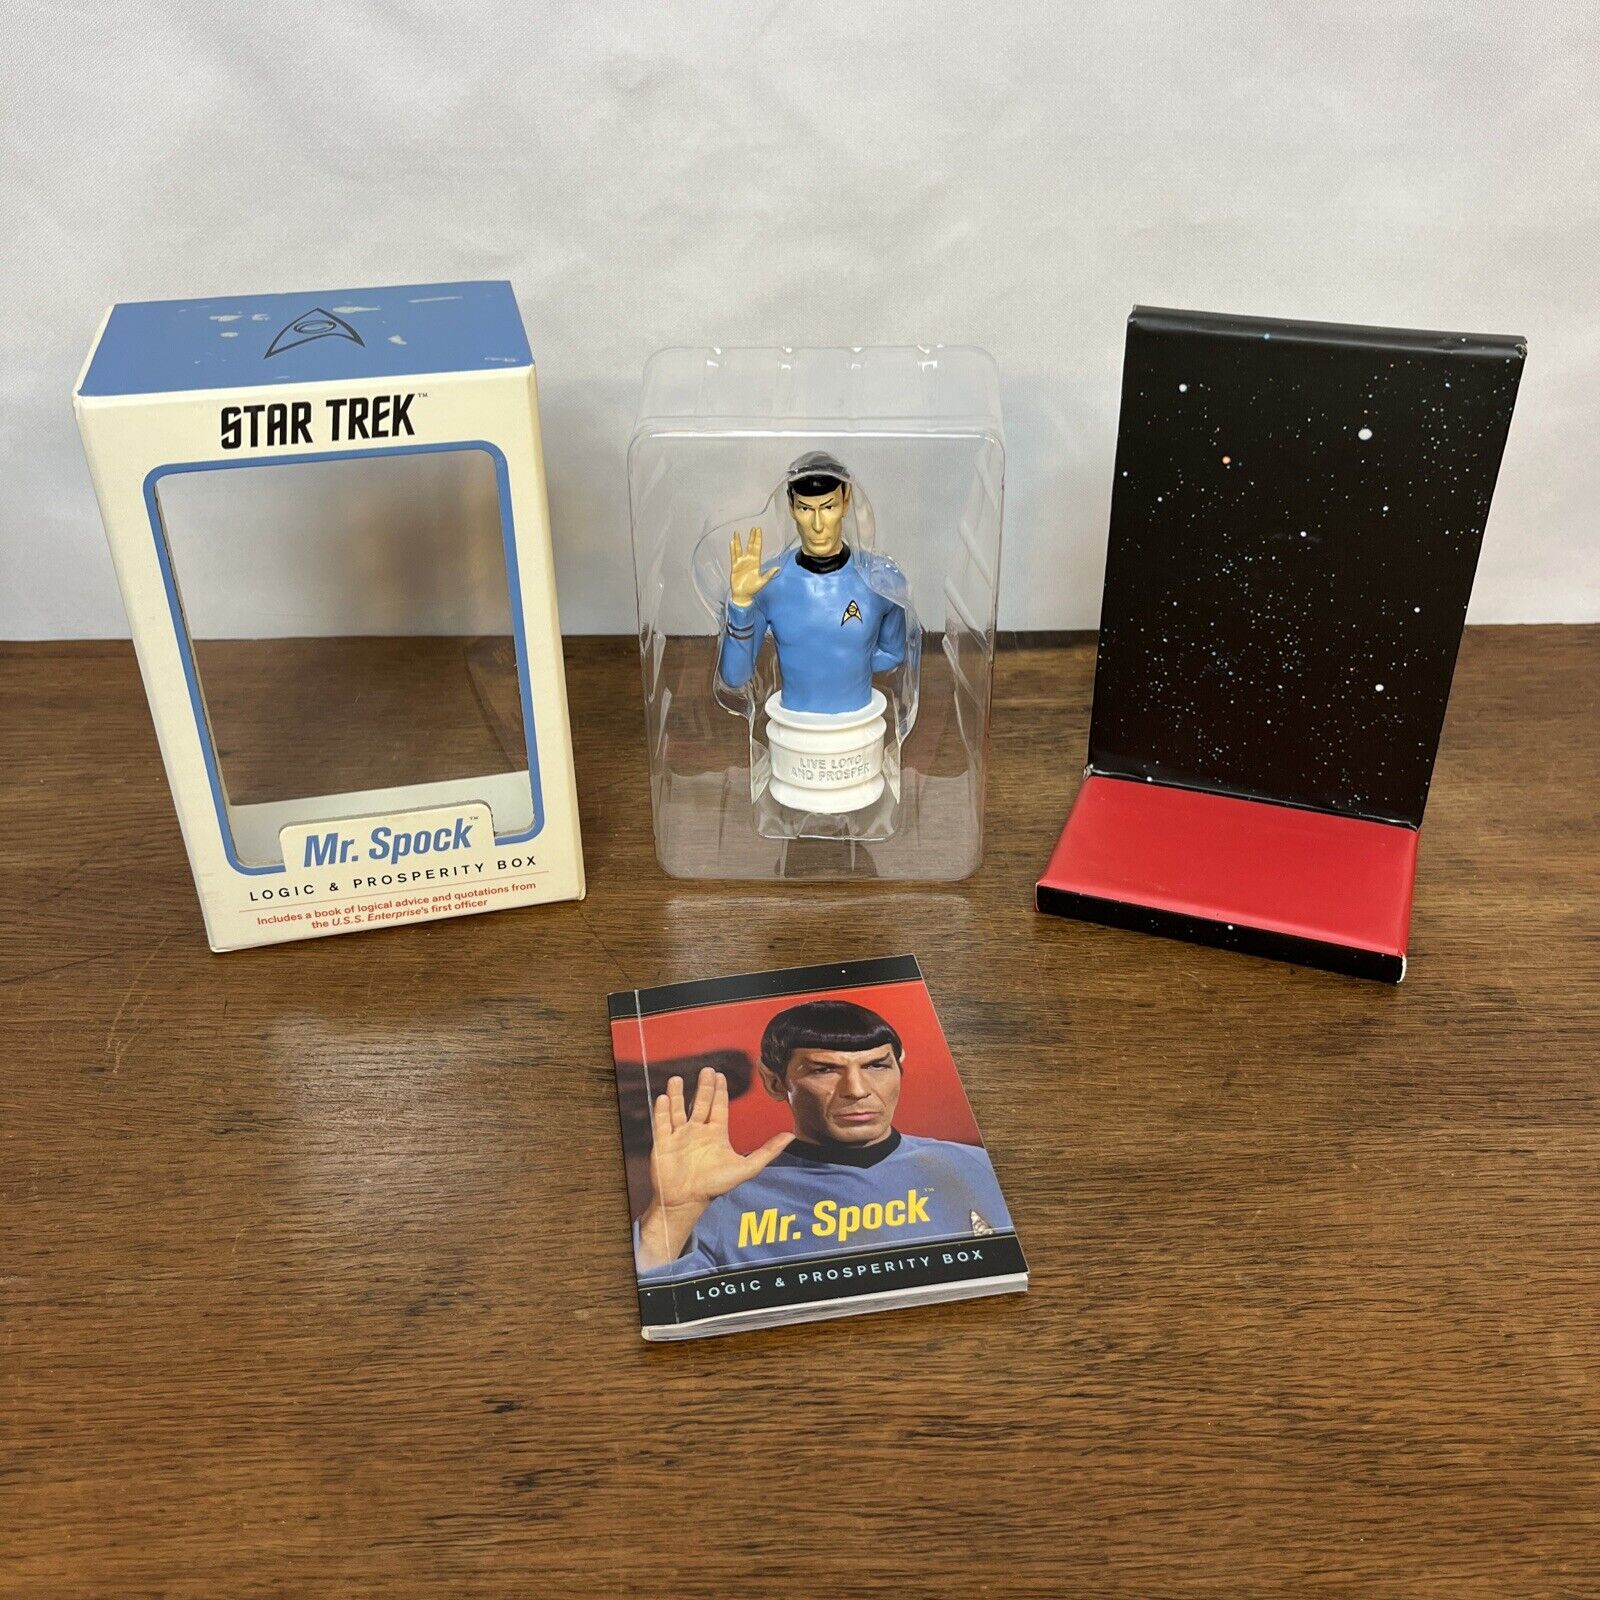 Star Trek Mr. Spock Logic & Prosperity Box